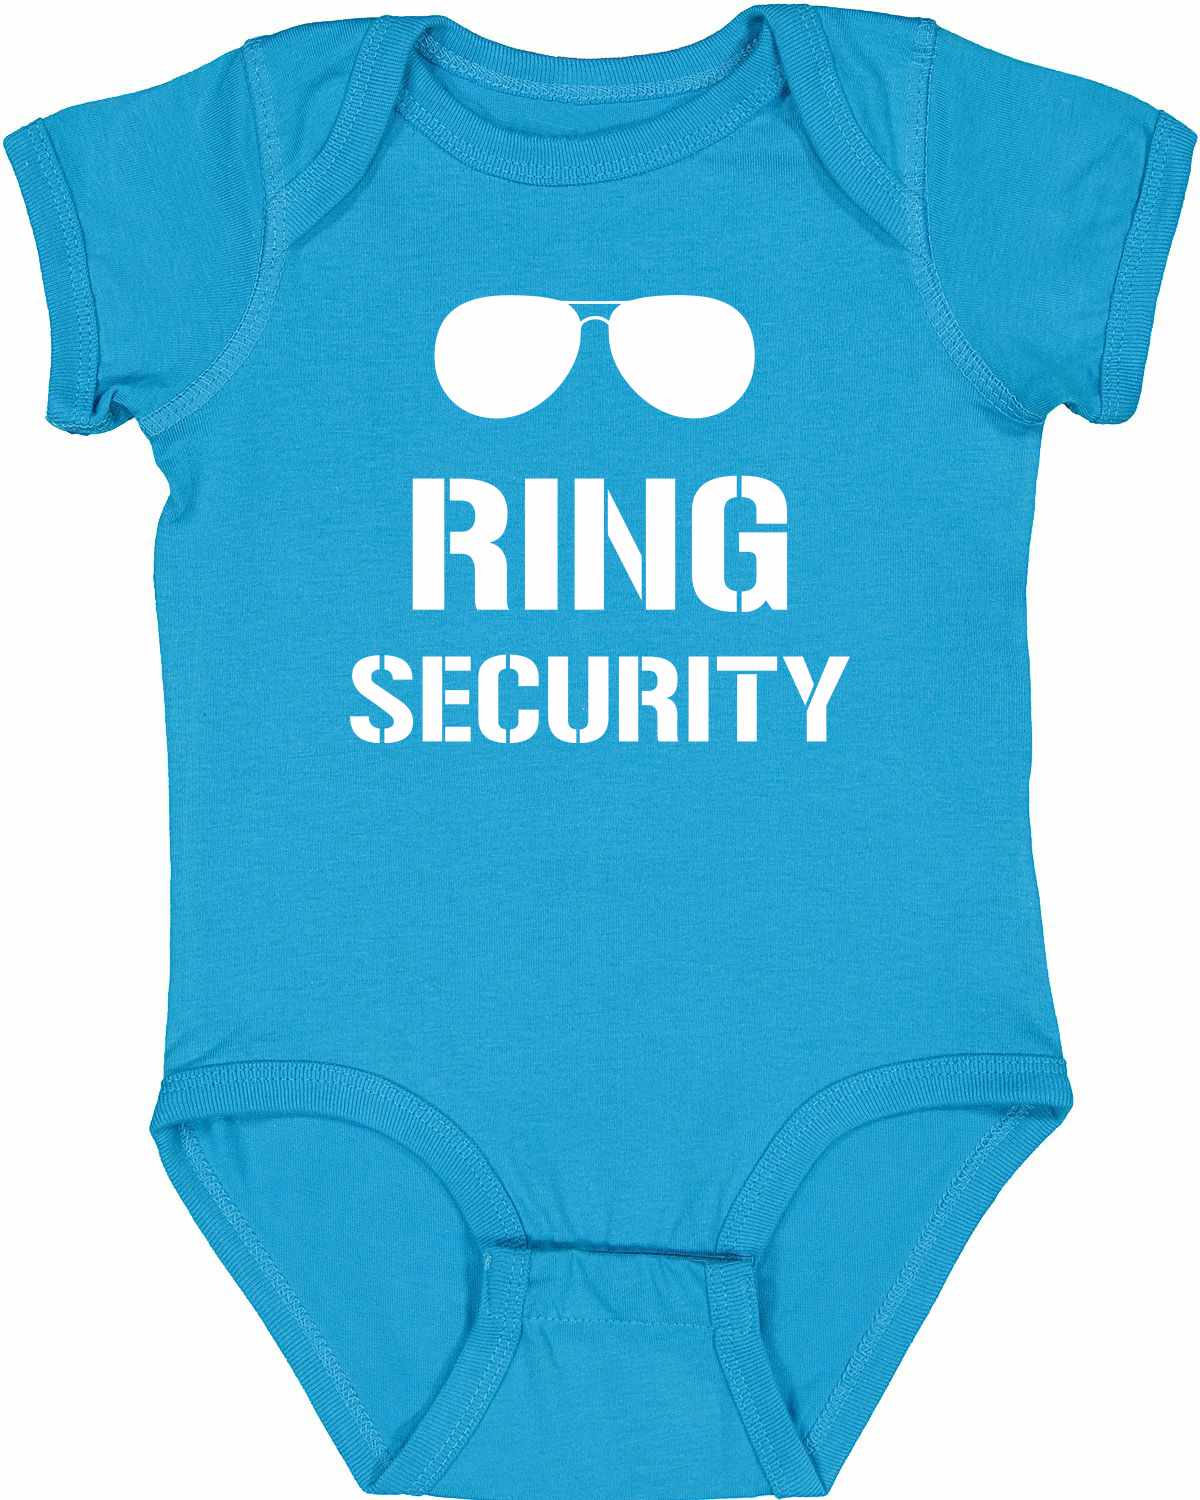 Ring Security on Infant BodySuit